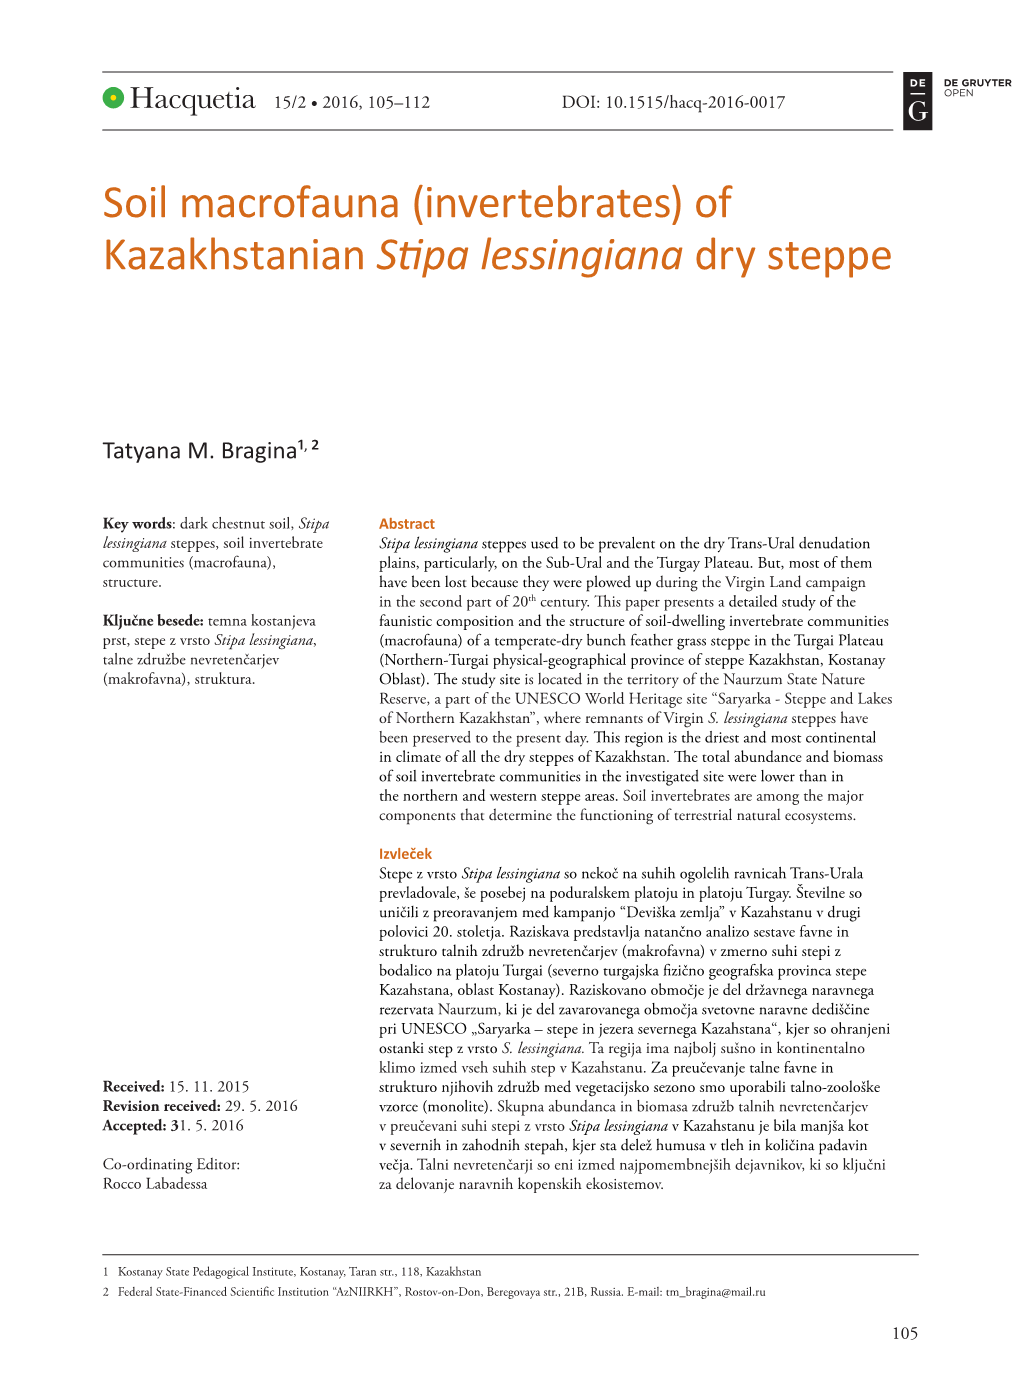 Soil Macrofauna (Invertebrates) of Kazakhstanian Sfipa Lessingiana Dry Steppe